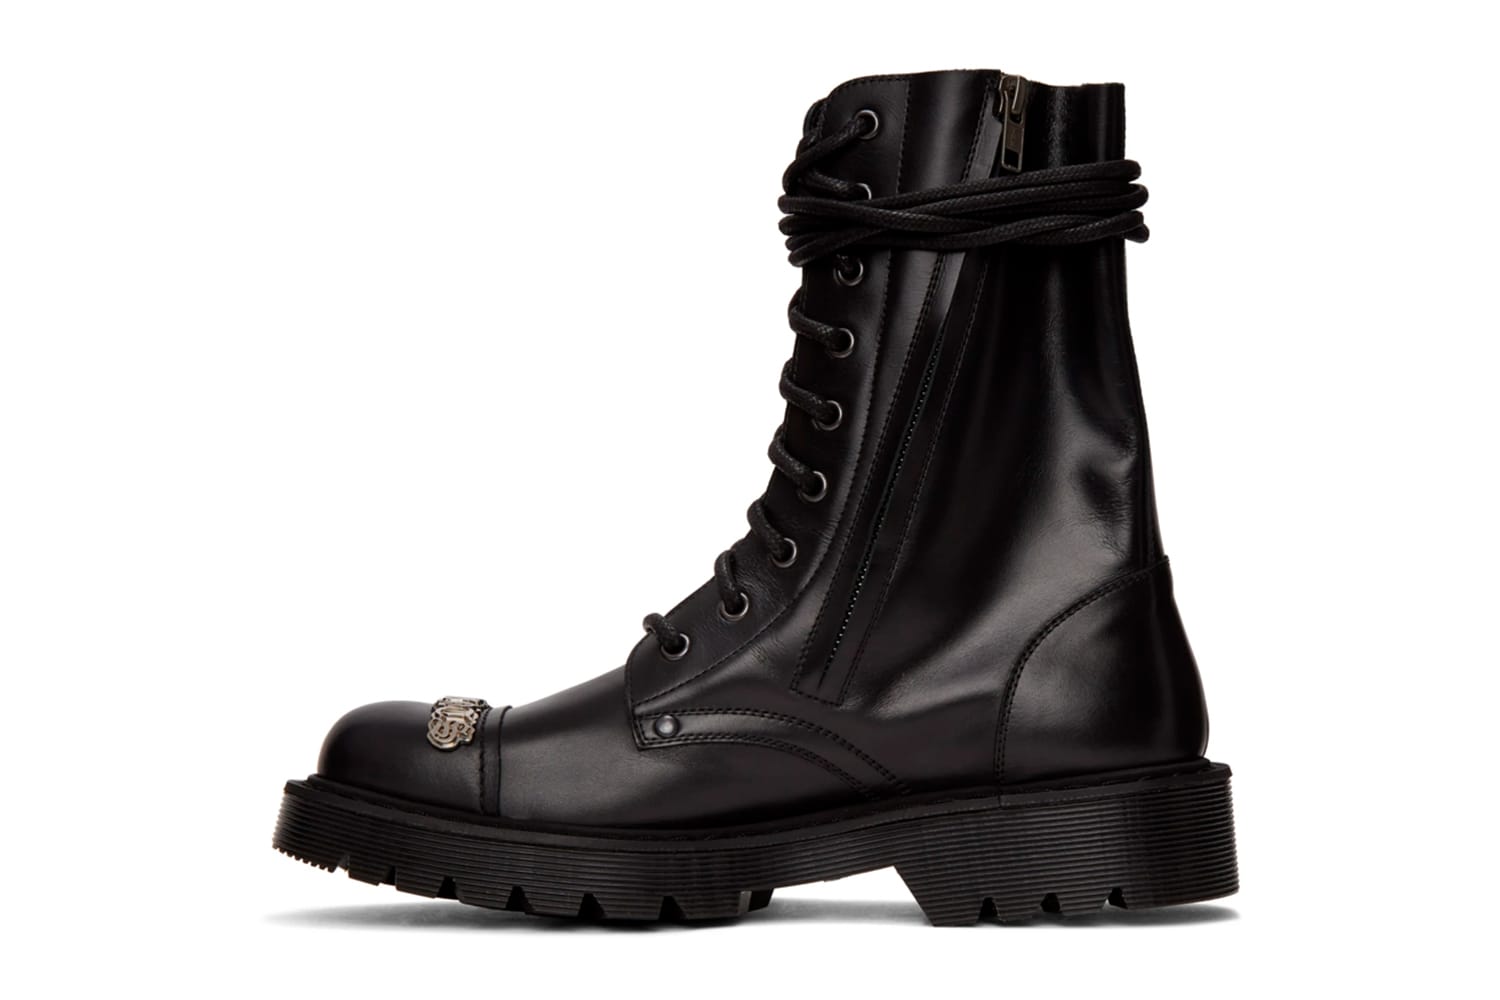 buy combat boots near me